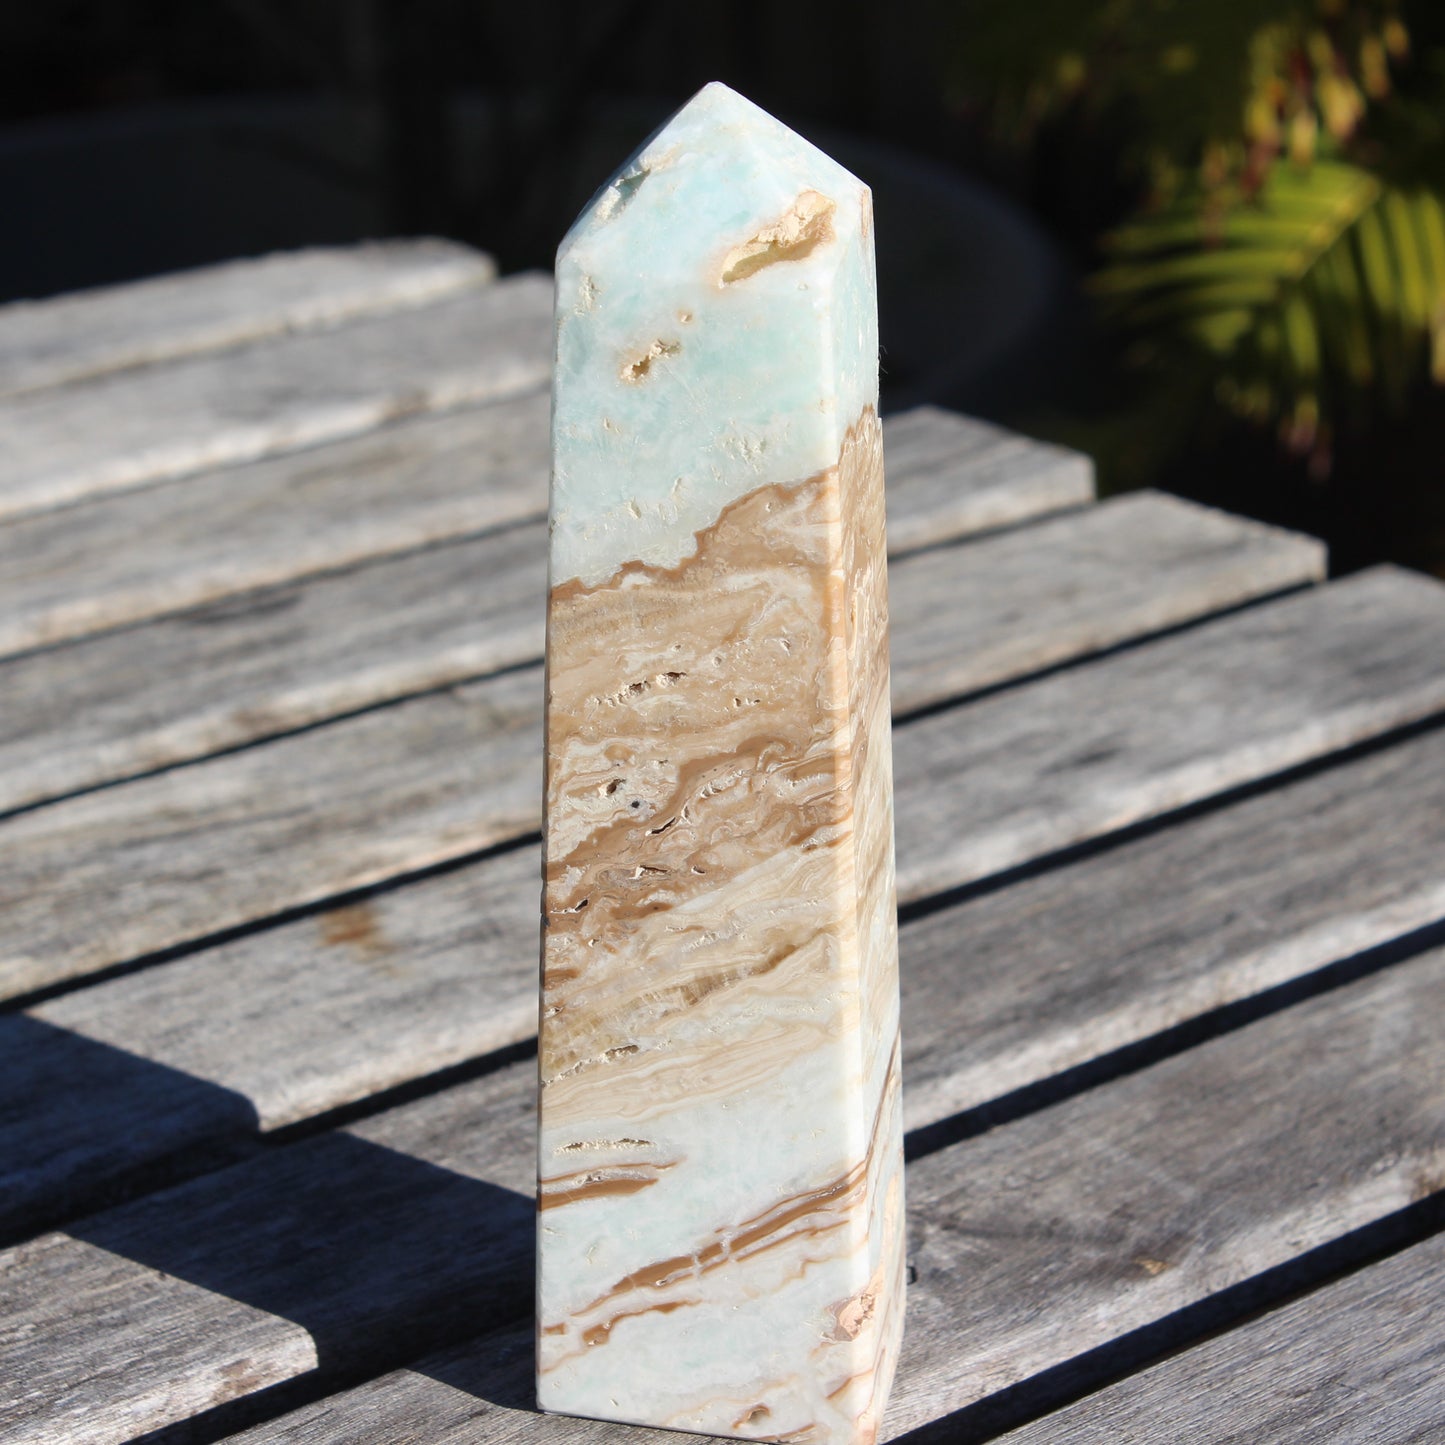 Caribbean Calcite aqua blue obelisk 591g